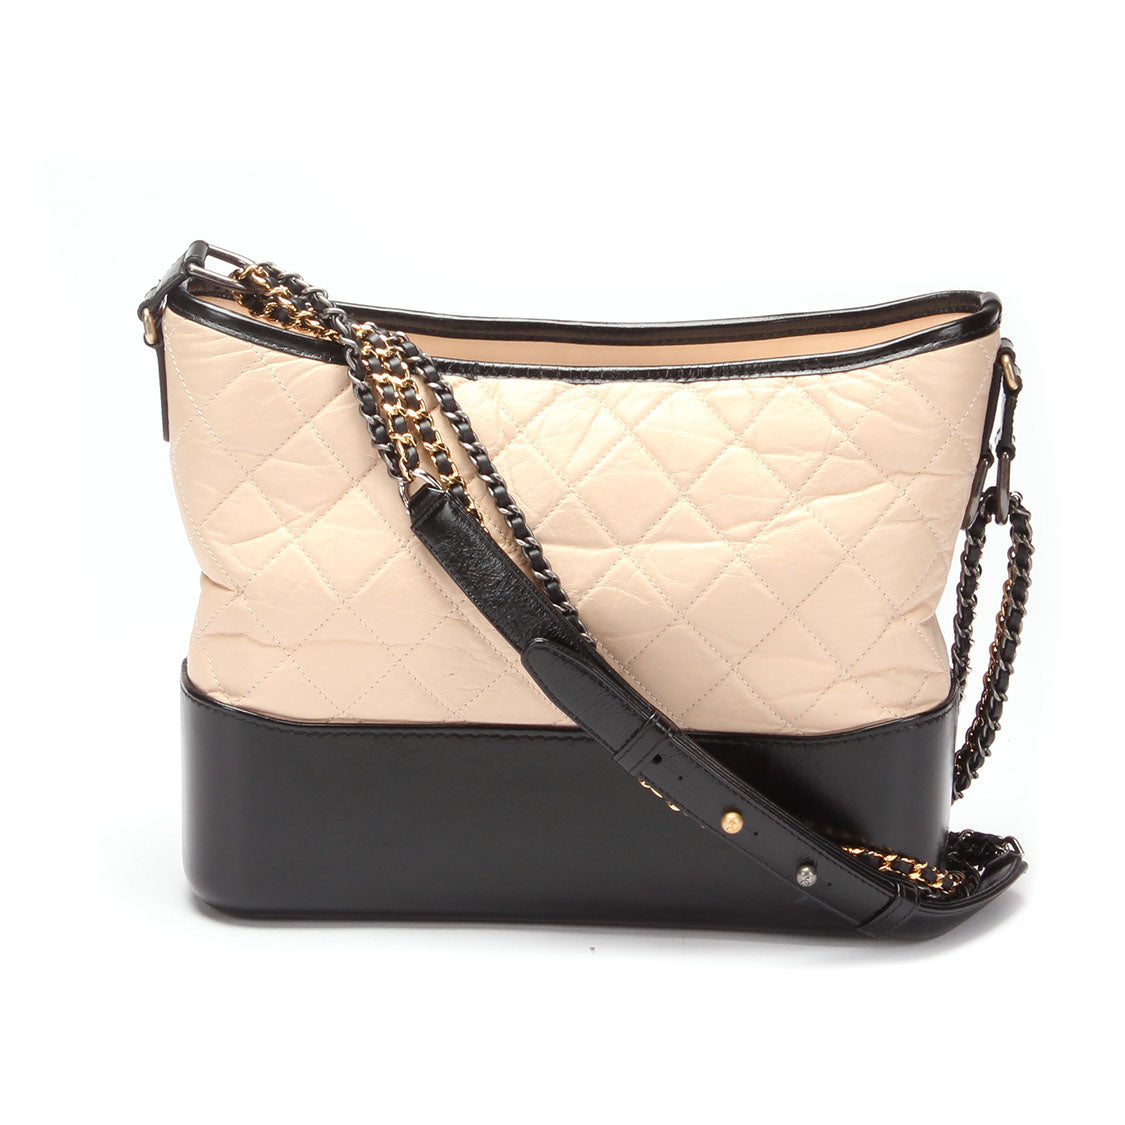 Leather Gabrielle Shoulder Bag – LuxUness